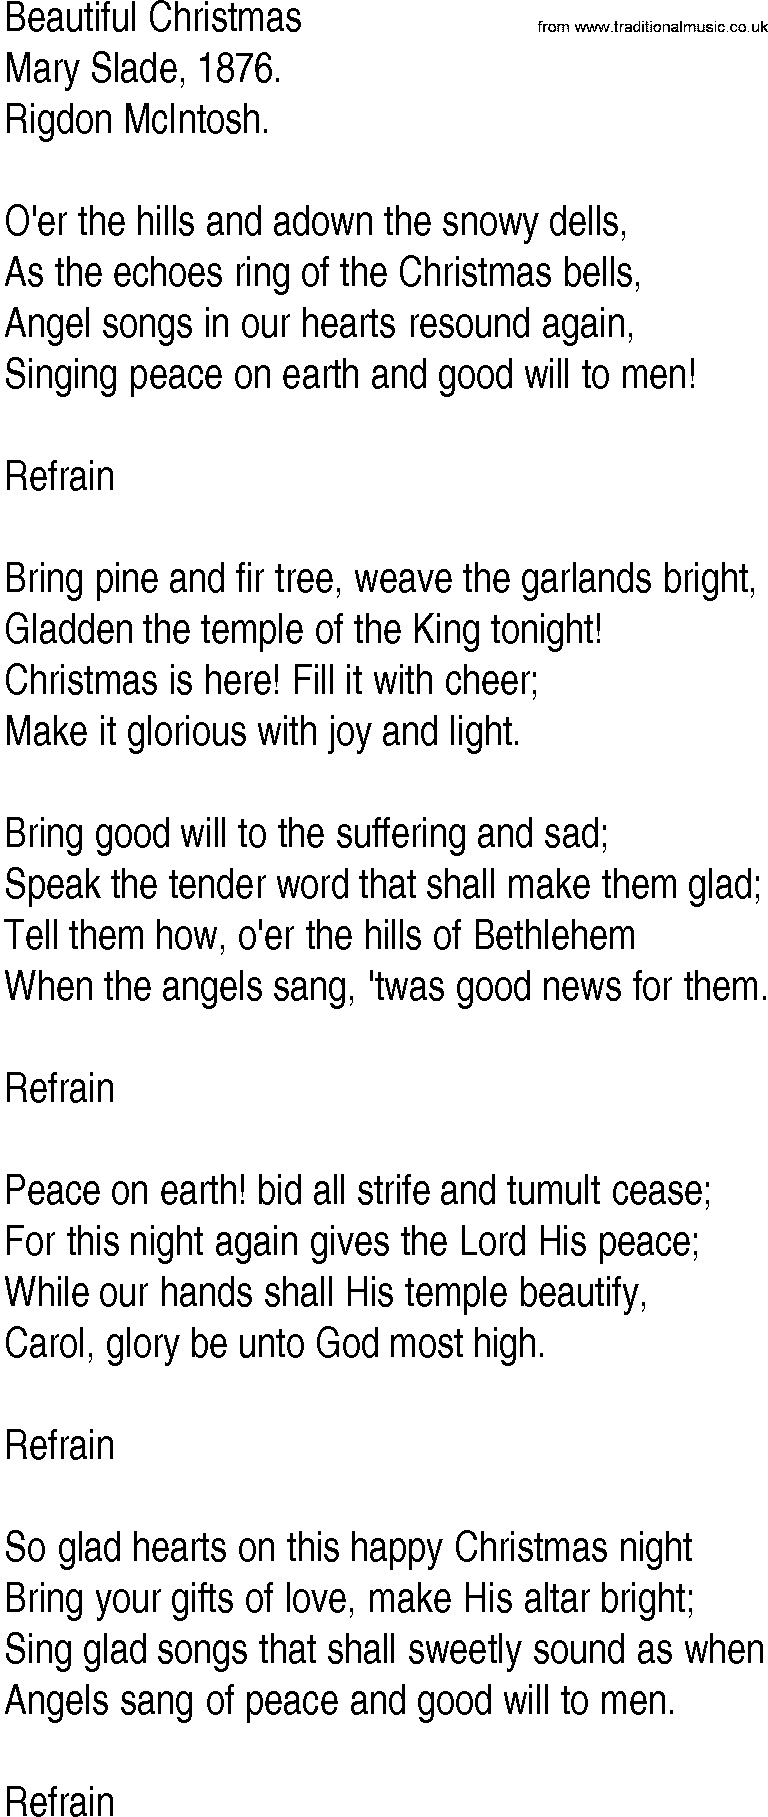 Hymn and Gospel Song: Beautiful Christmas by Mary Slade lyrics